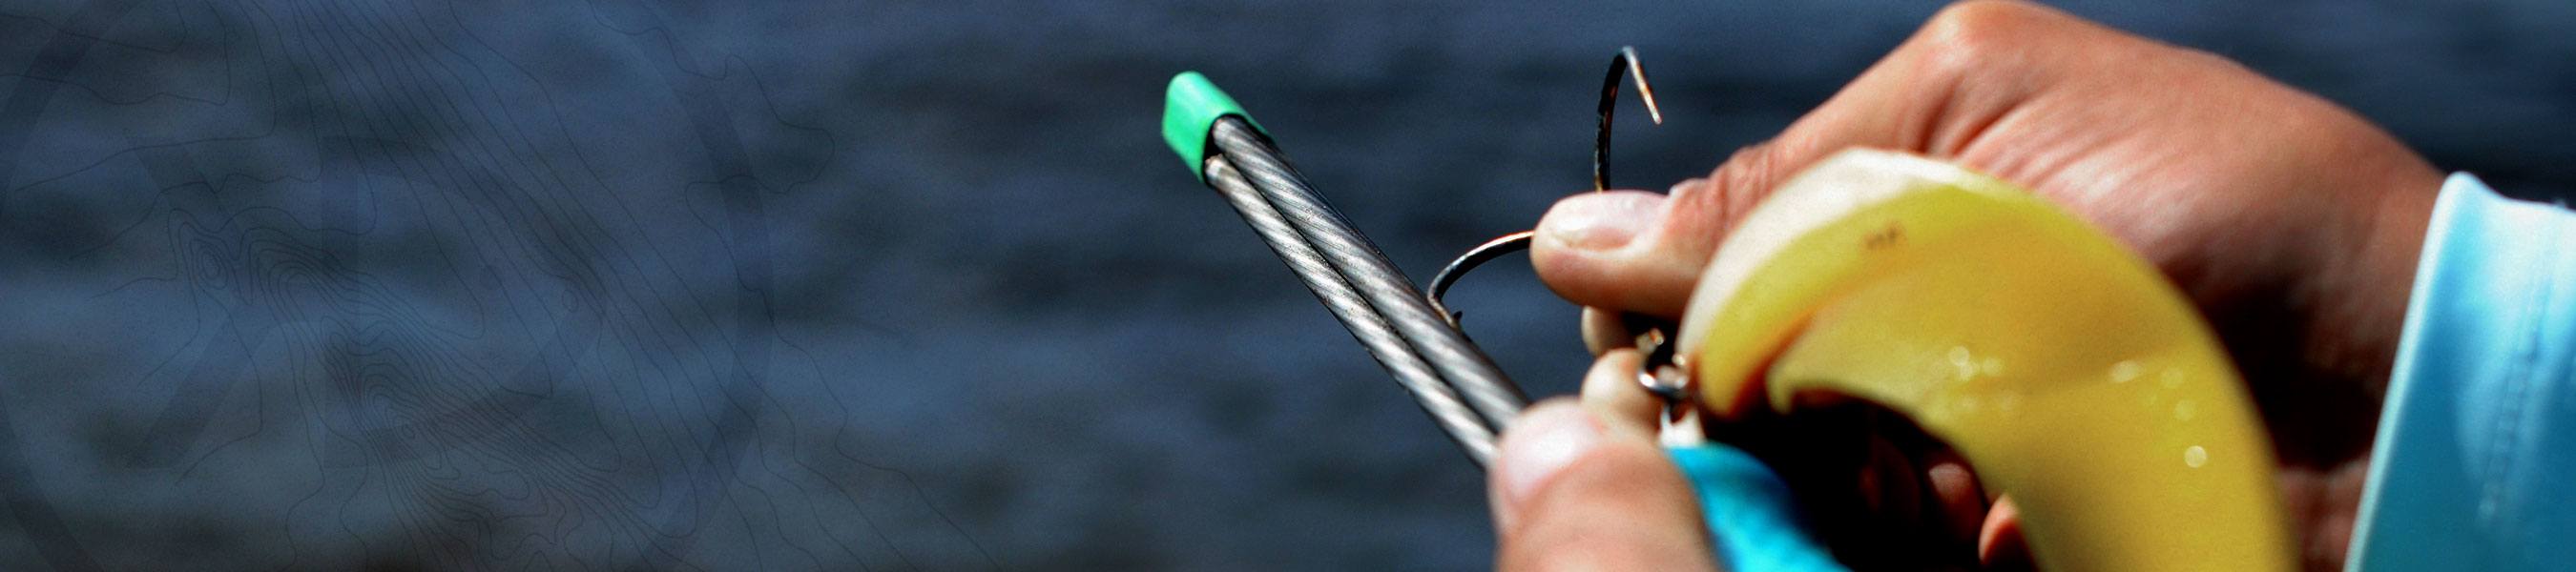 Musky angler holding a Stick File Hook sharpener and sharpening a big musky-sized treble hook